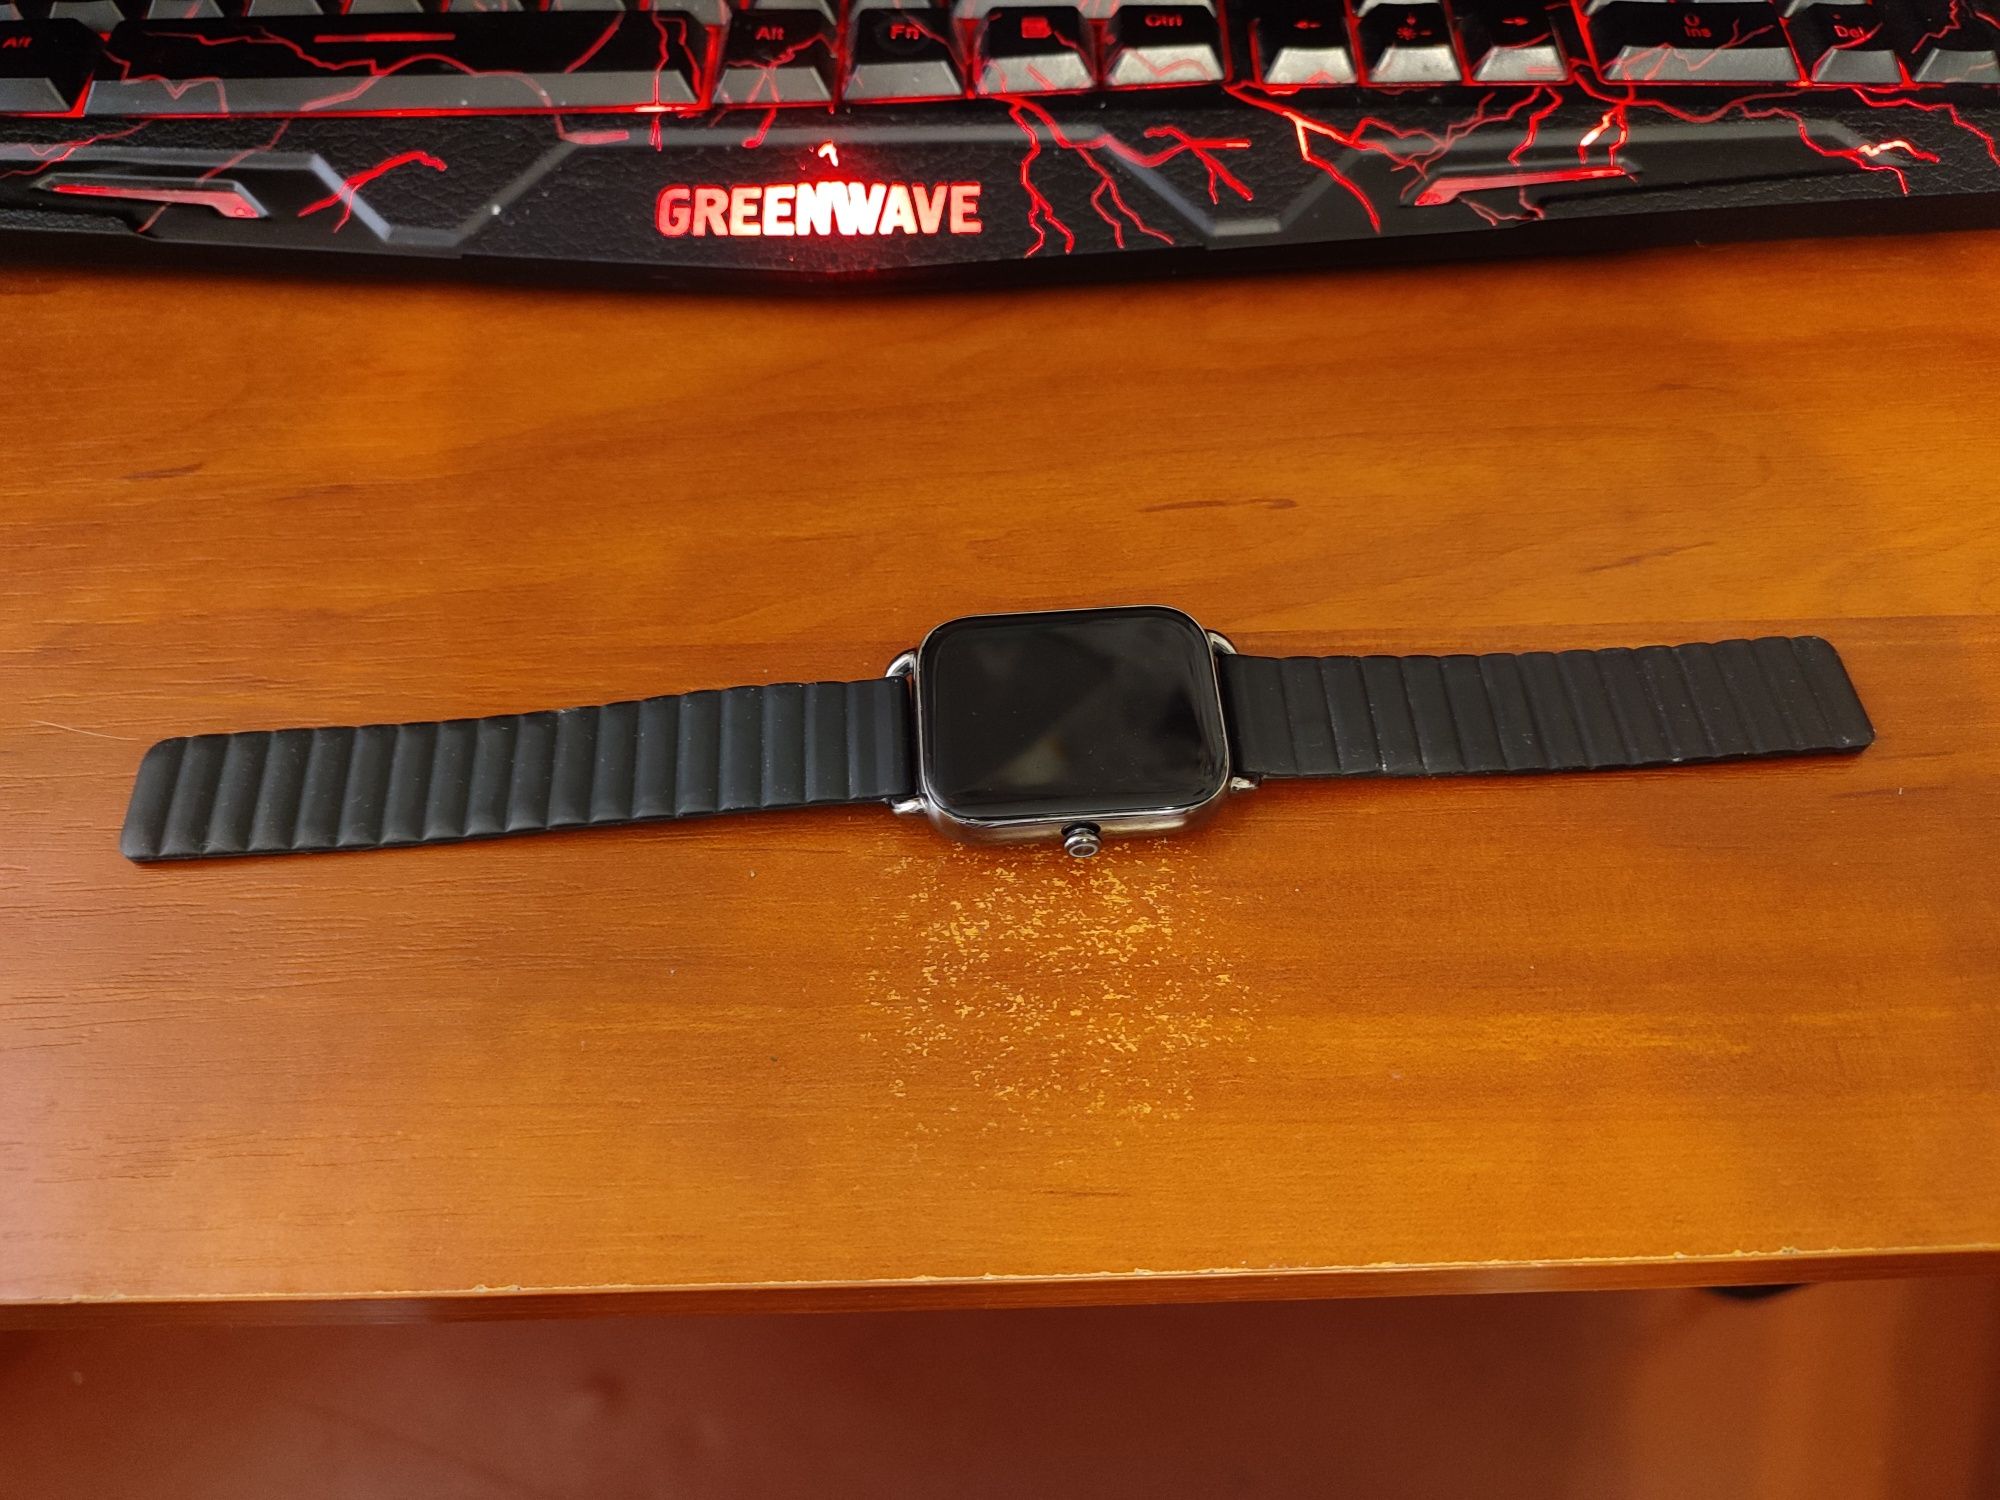 Смарт-часы Xiaomi Haylou RS4 PLUS